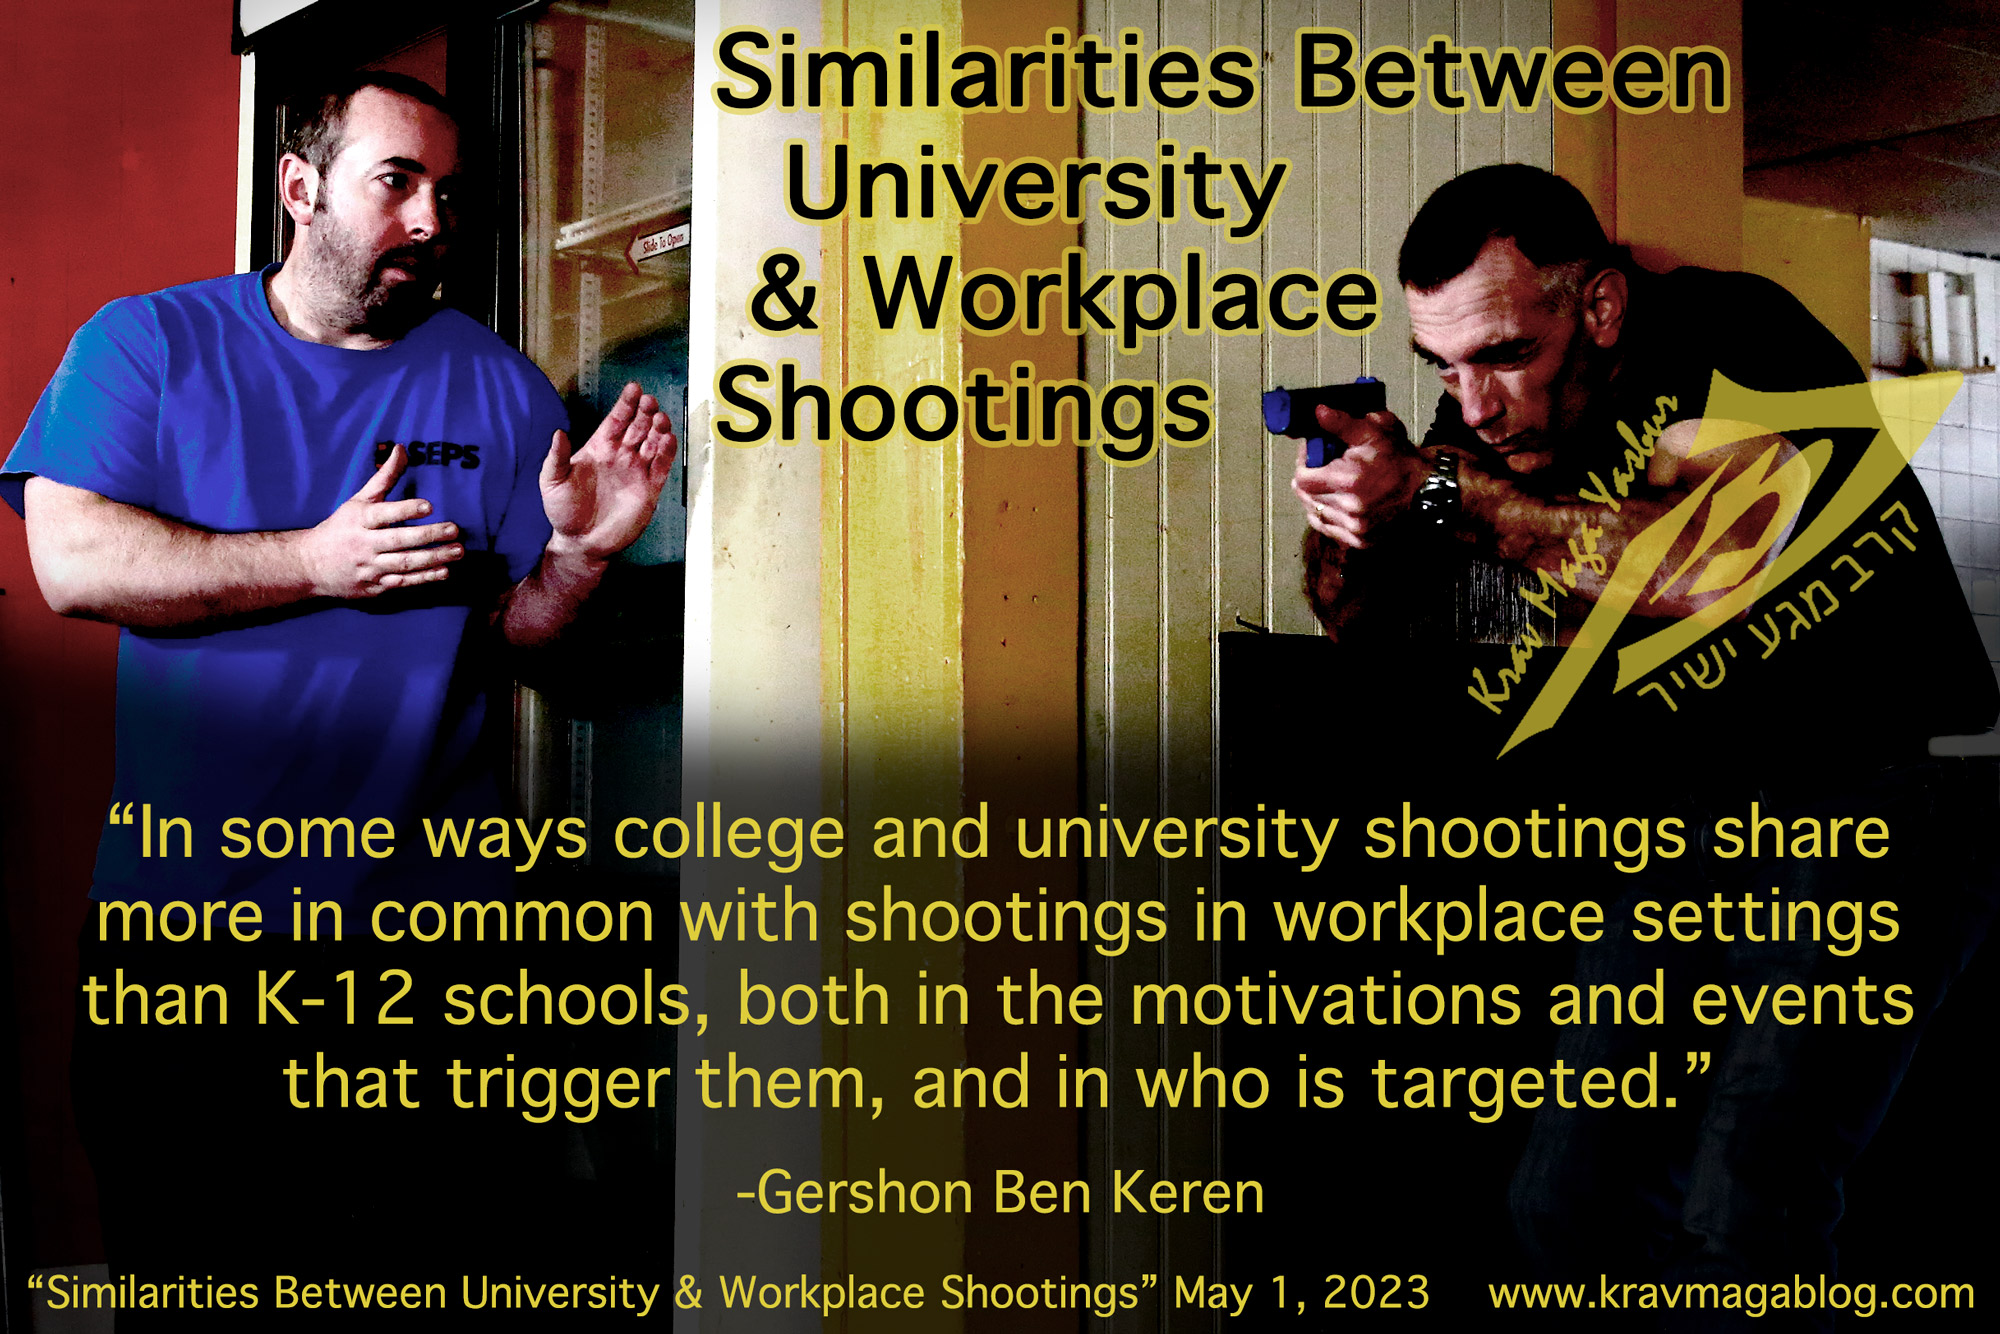 Blog About Similarities Between University & Workplace Shootings